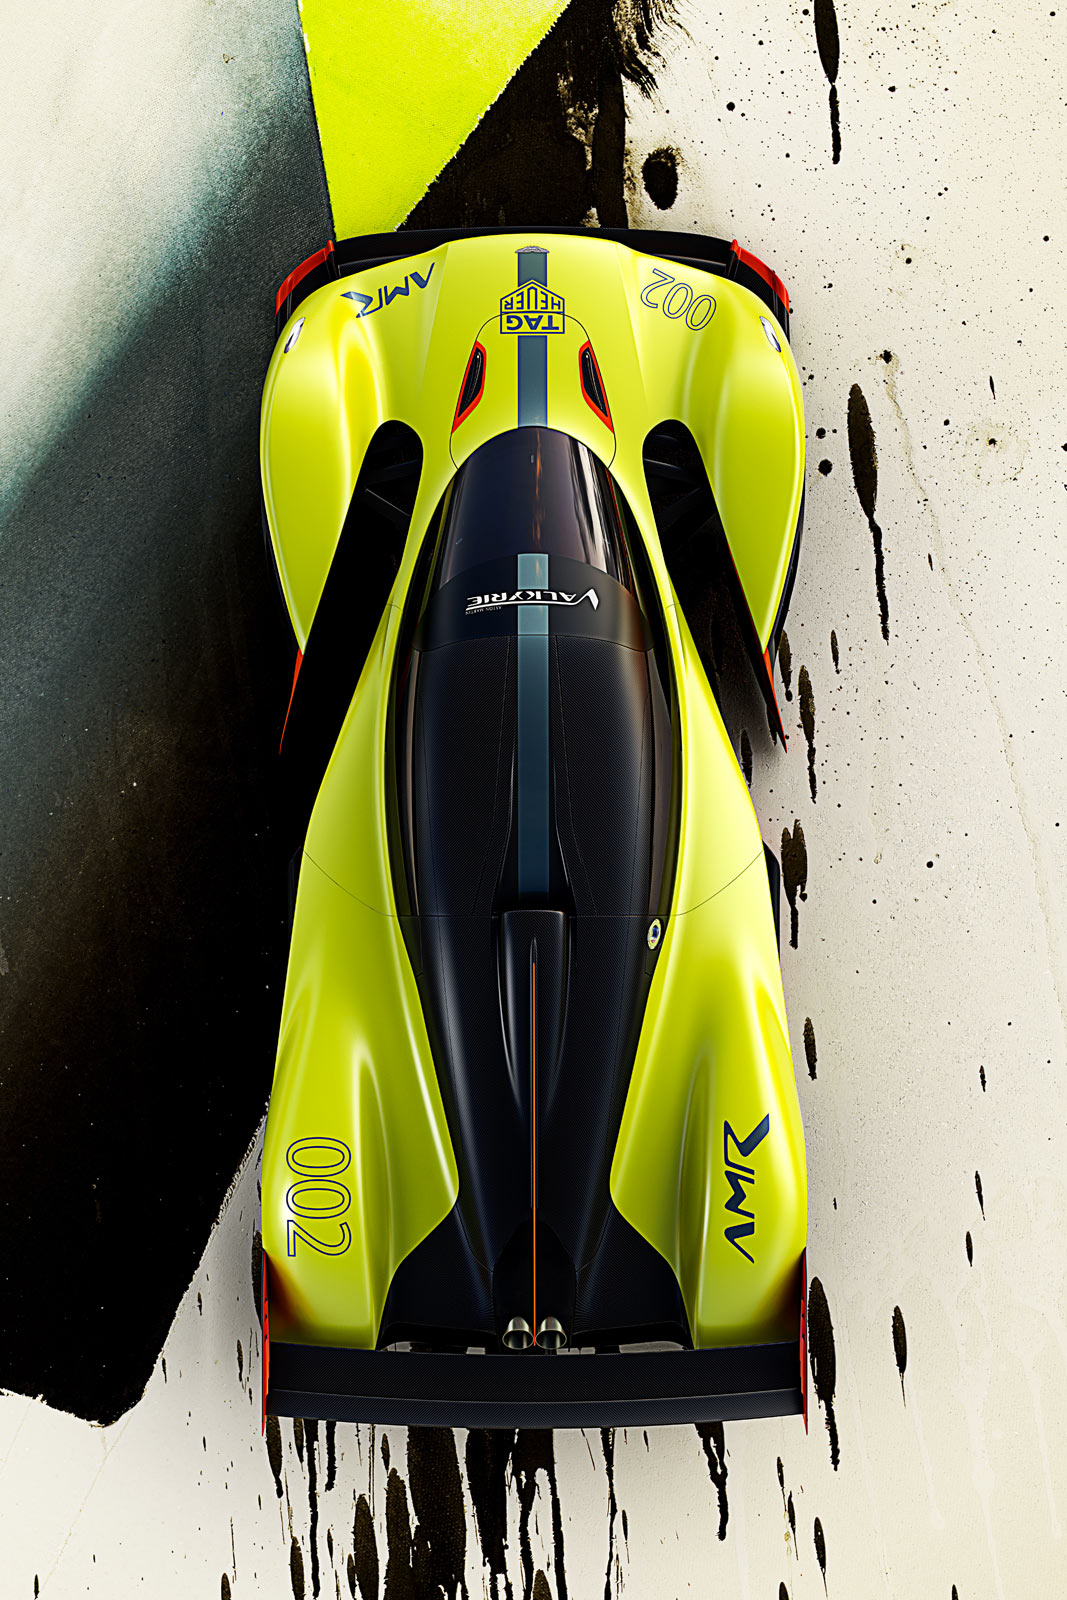 2022 Aston Martin Valkyrie Amr Pro Wallpapers